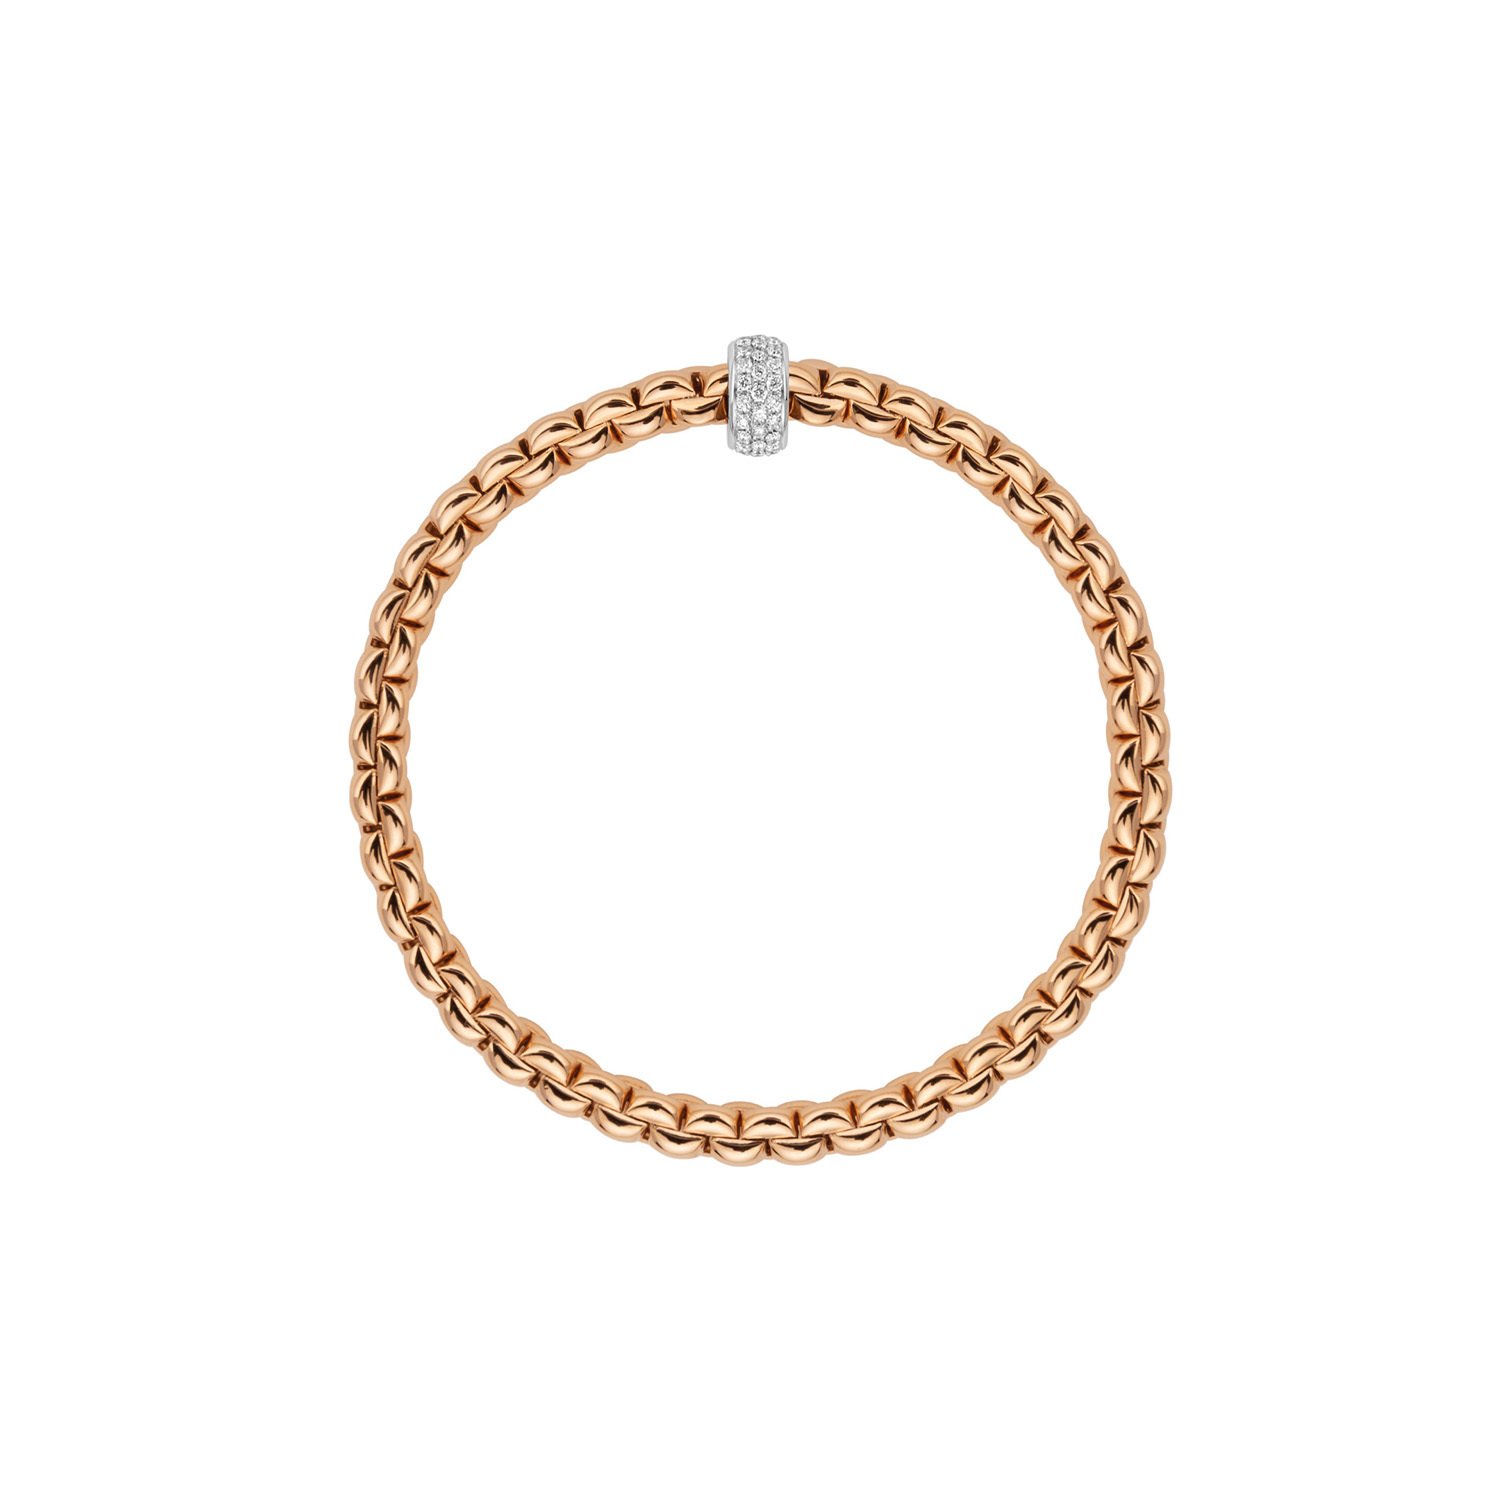 Flex'it Bracelet with Pave Diamond Rondel